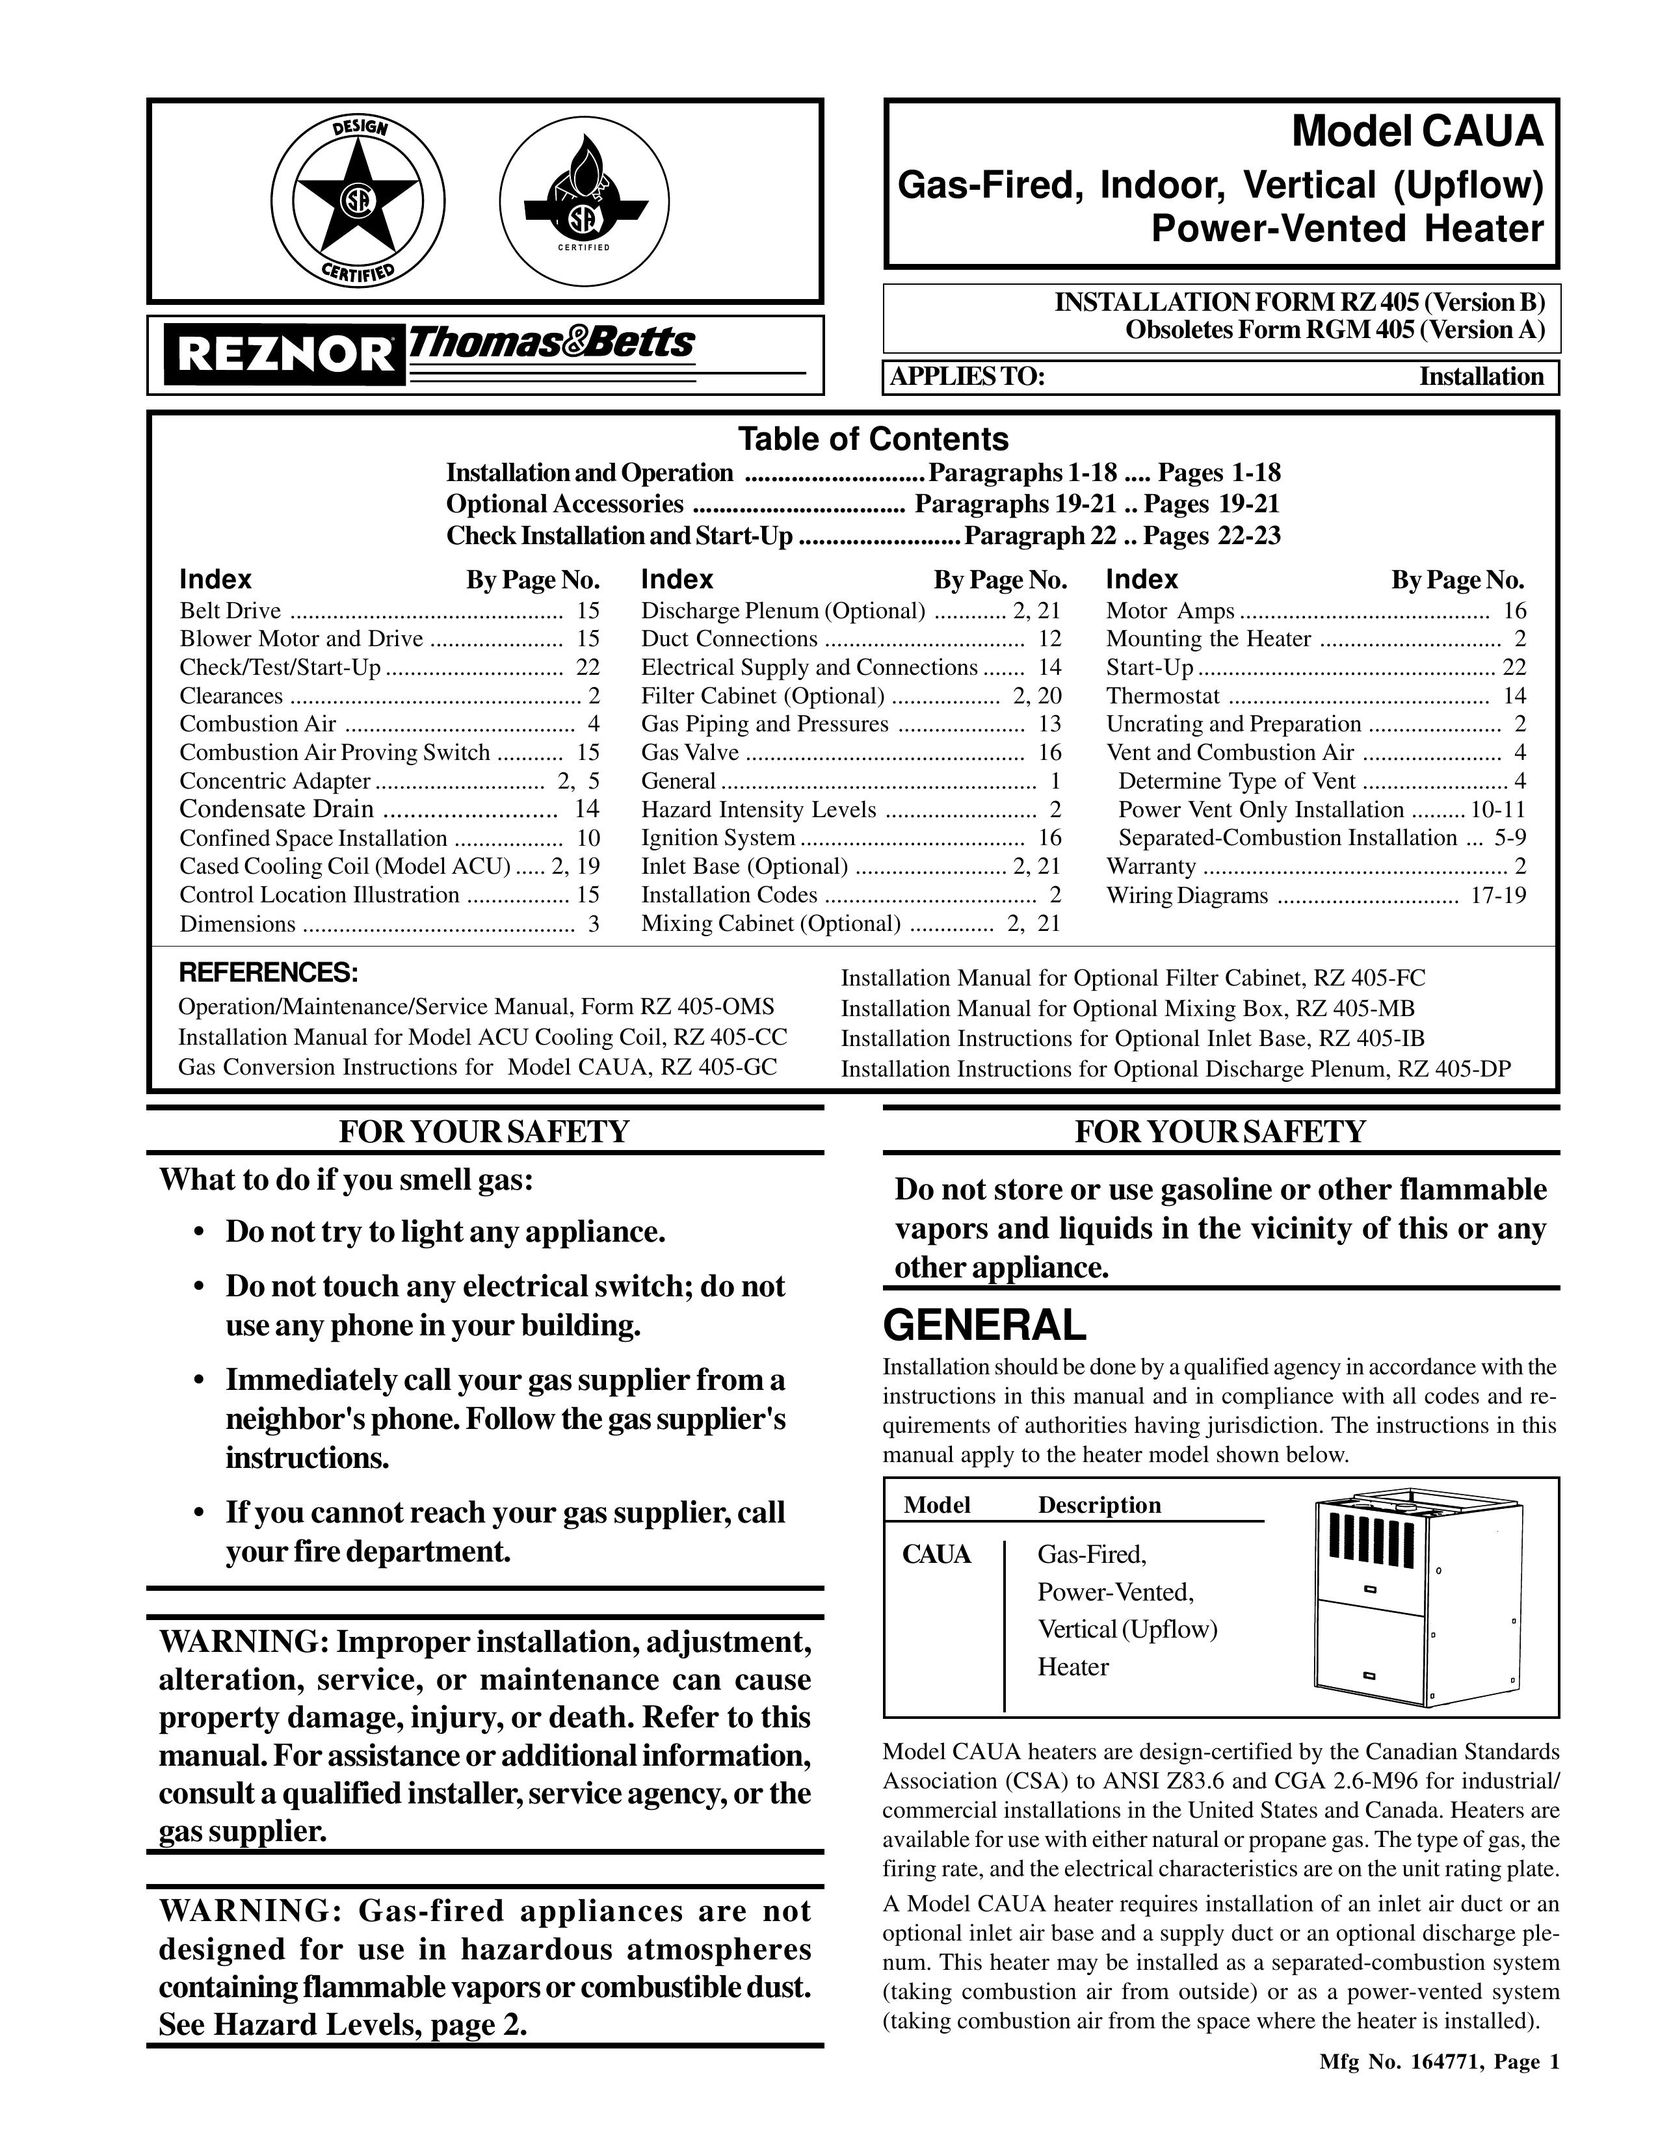 Thomas & Betts RZ405 Furnace User Manual